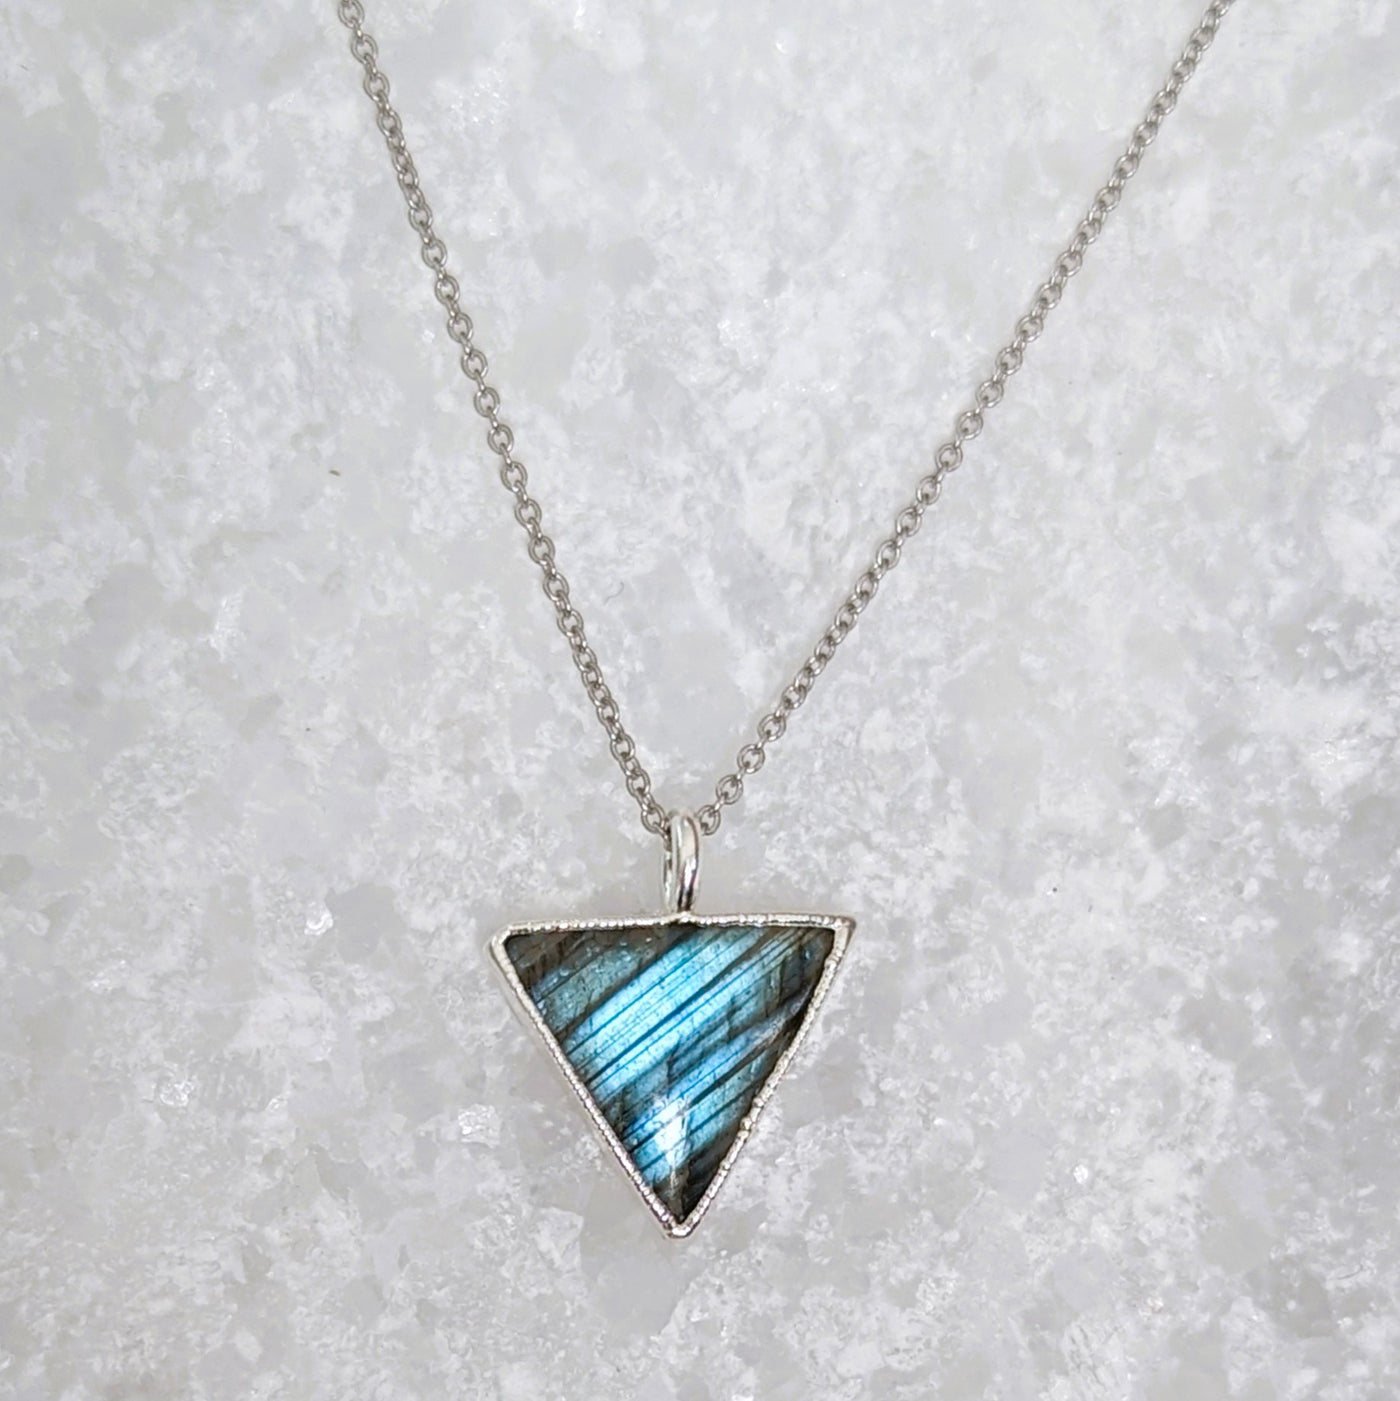 sterling silver triangular labradorite pendant necklace